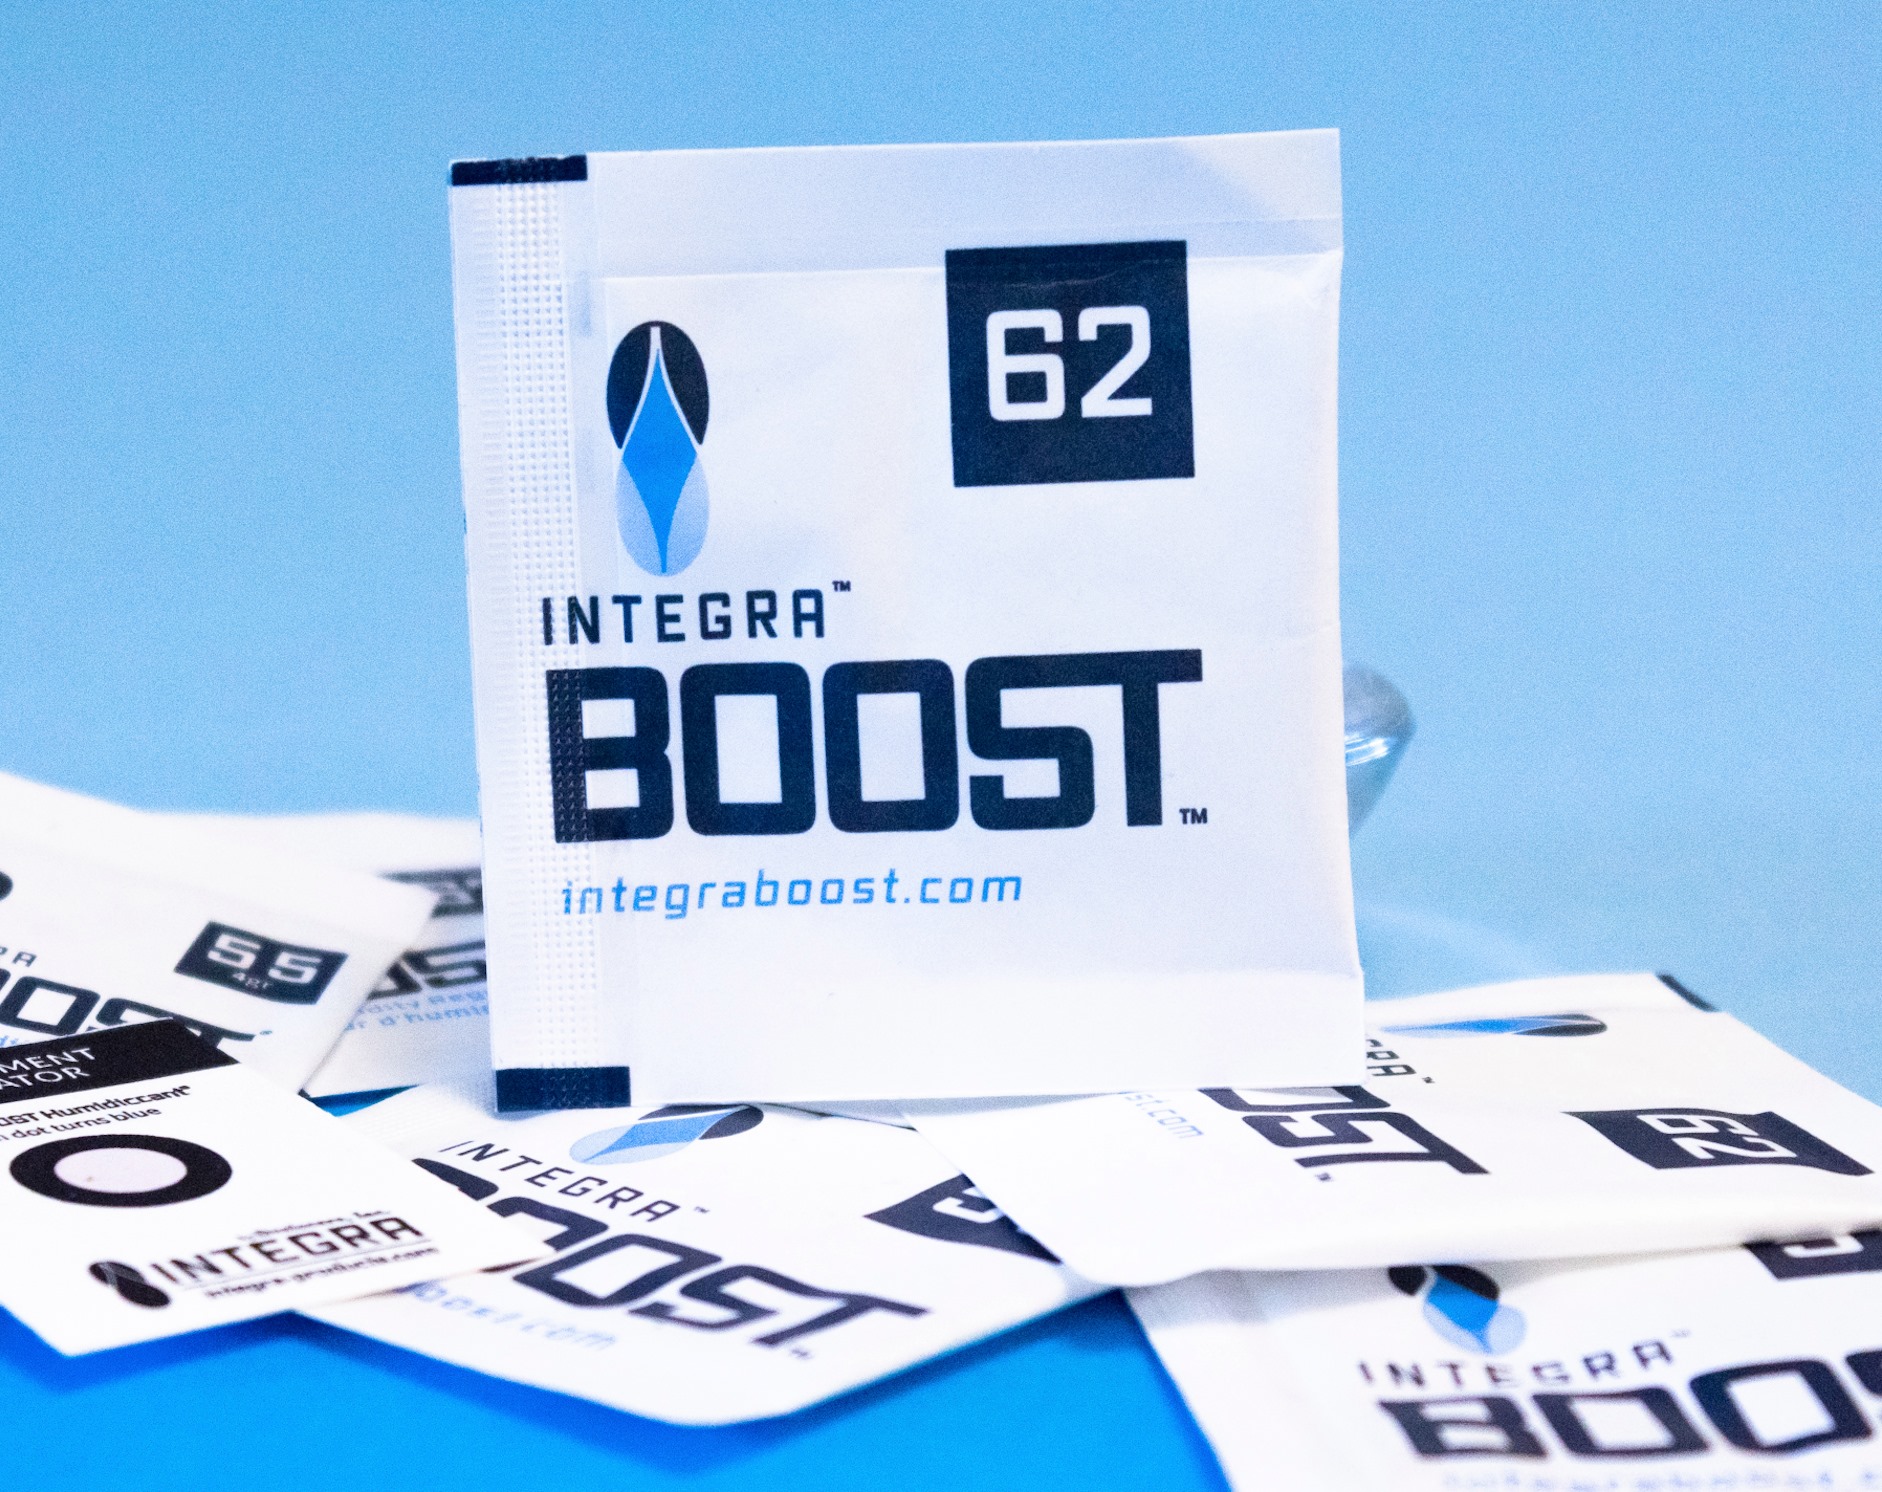 Desiccare 4 gram Integra BOOST® 62% RH 2-way humidity control packs